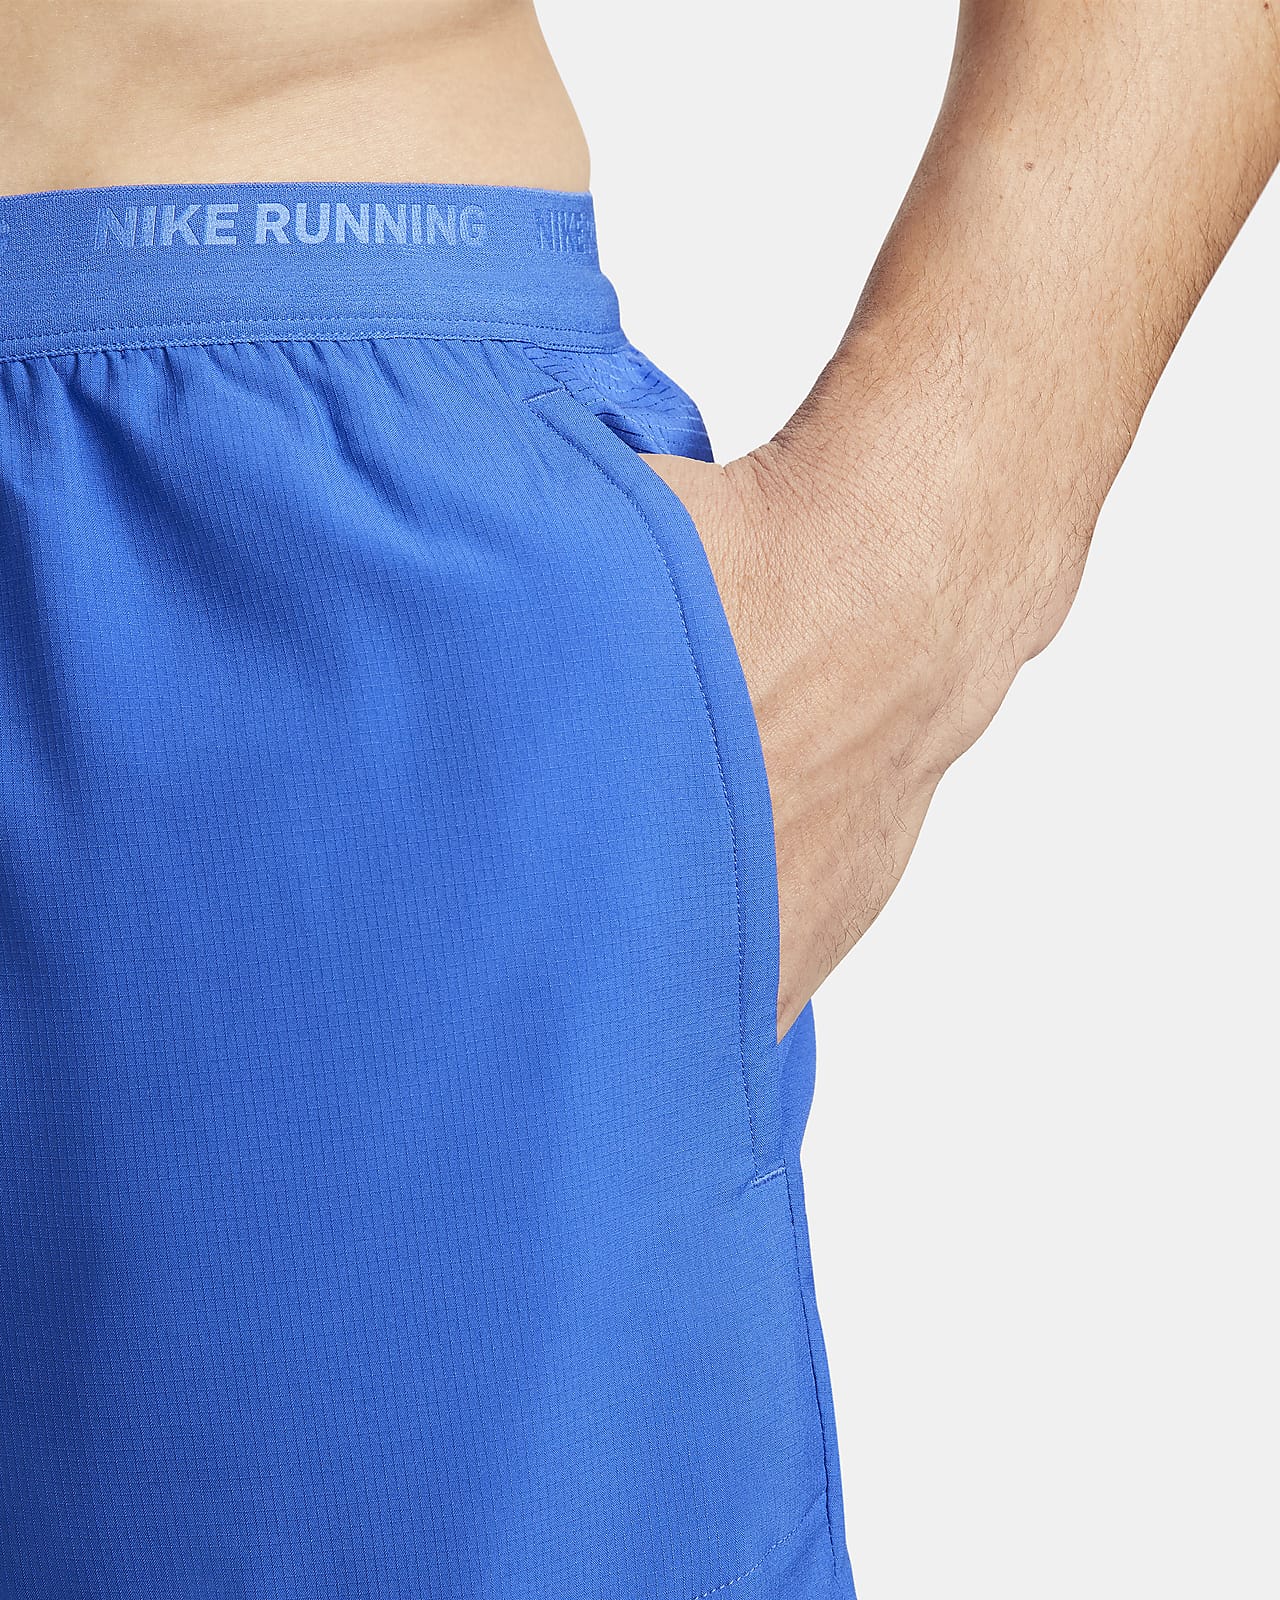 Men's Skin-Tight Garment Running Short Sleeved Sportswear Elastic